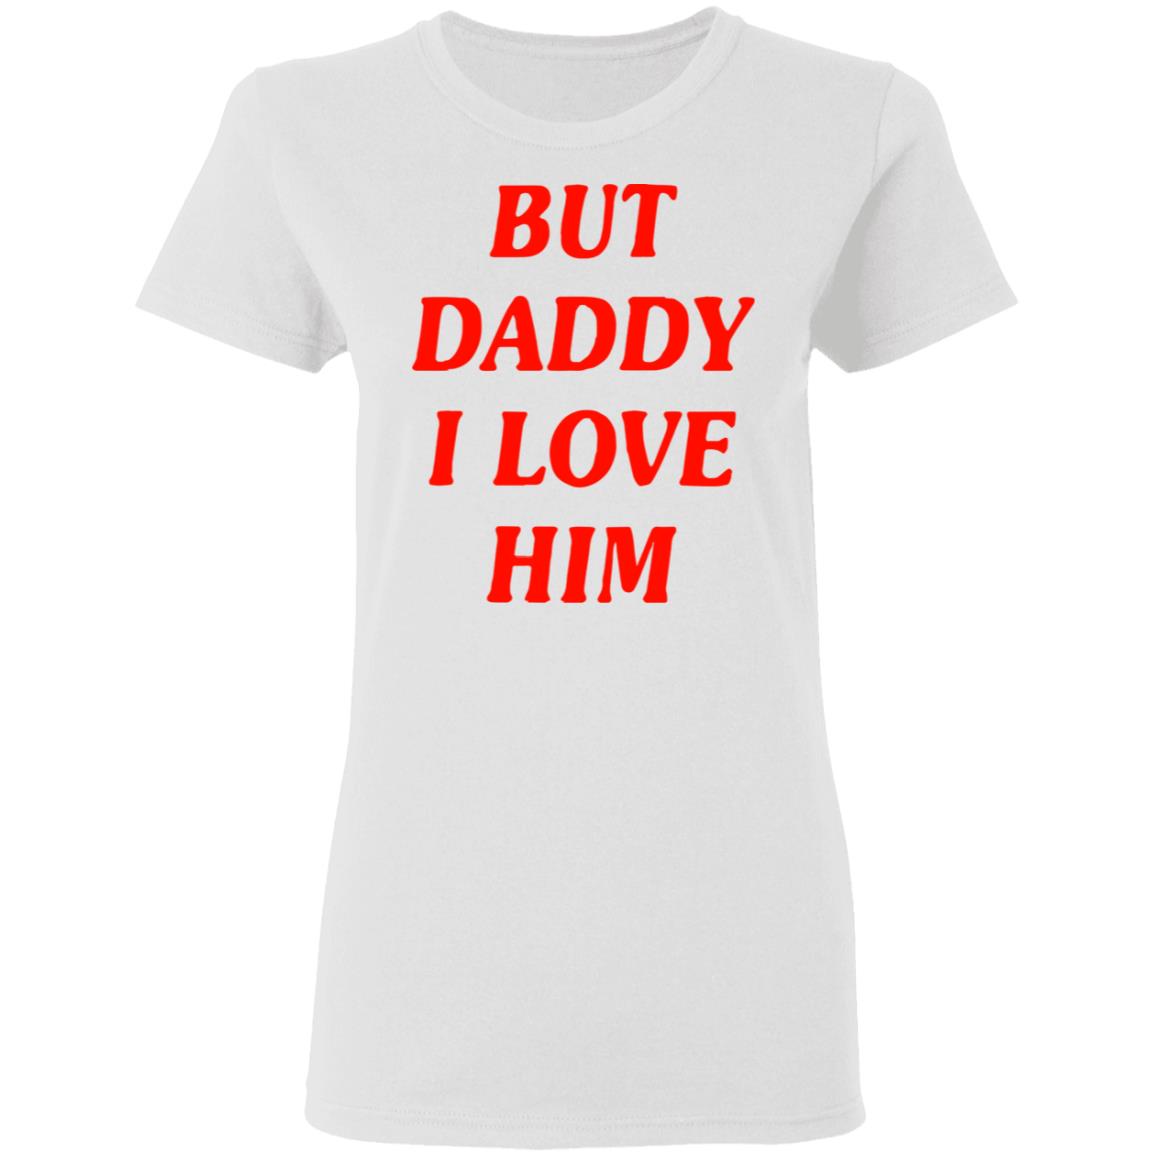 But Daddy I love him shirt - Rockatee